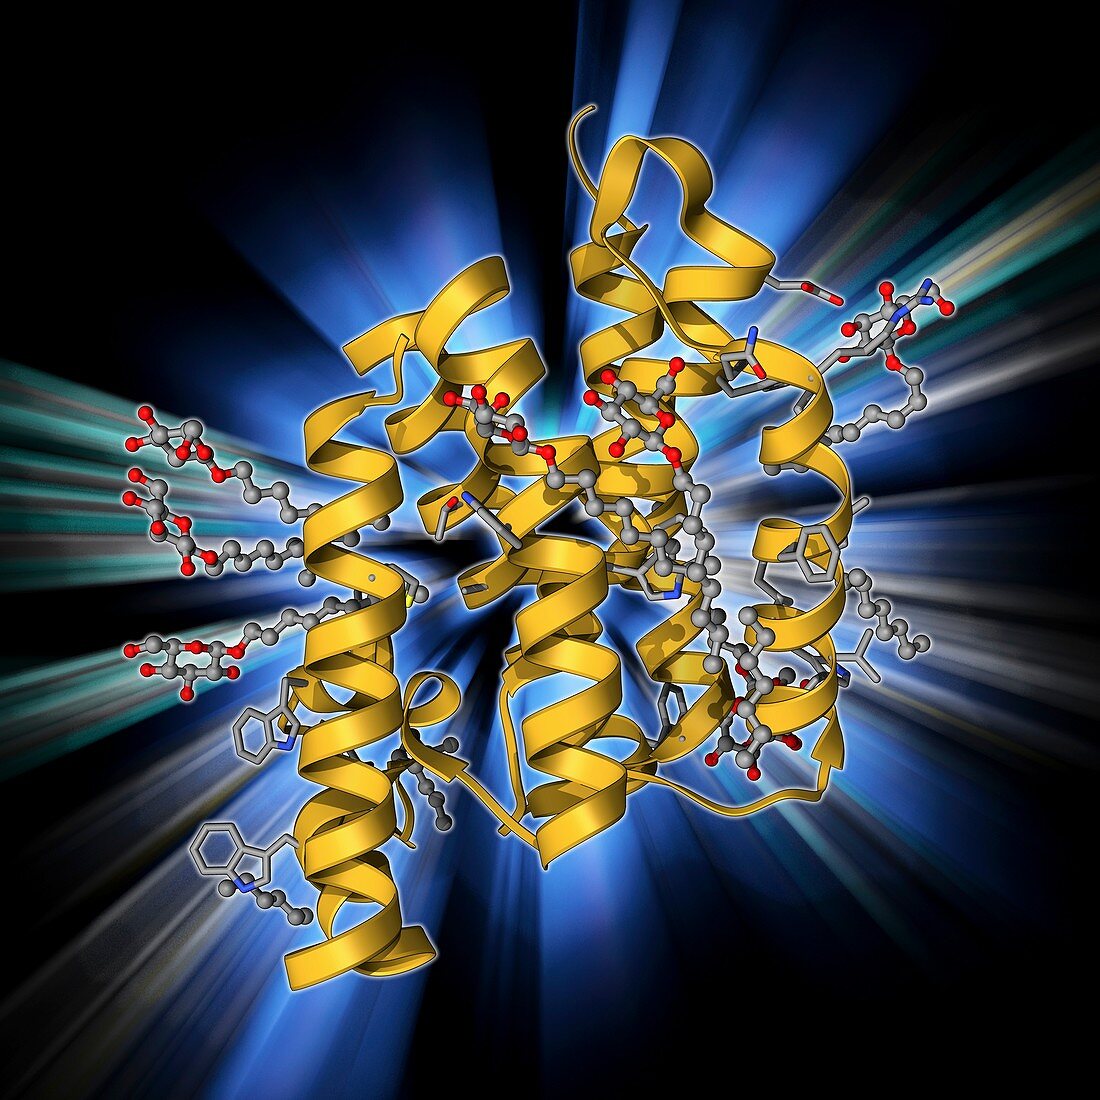 Rhomboid protease molecule